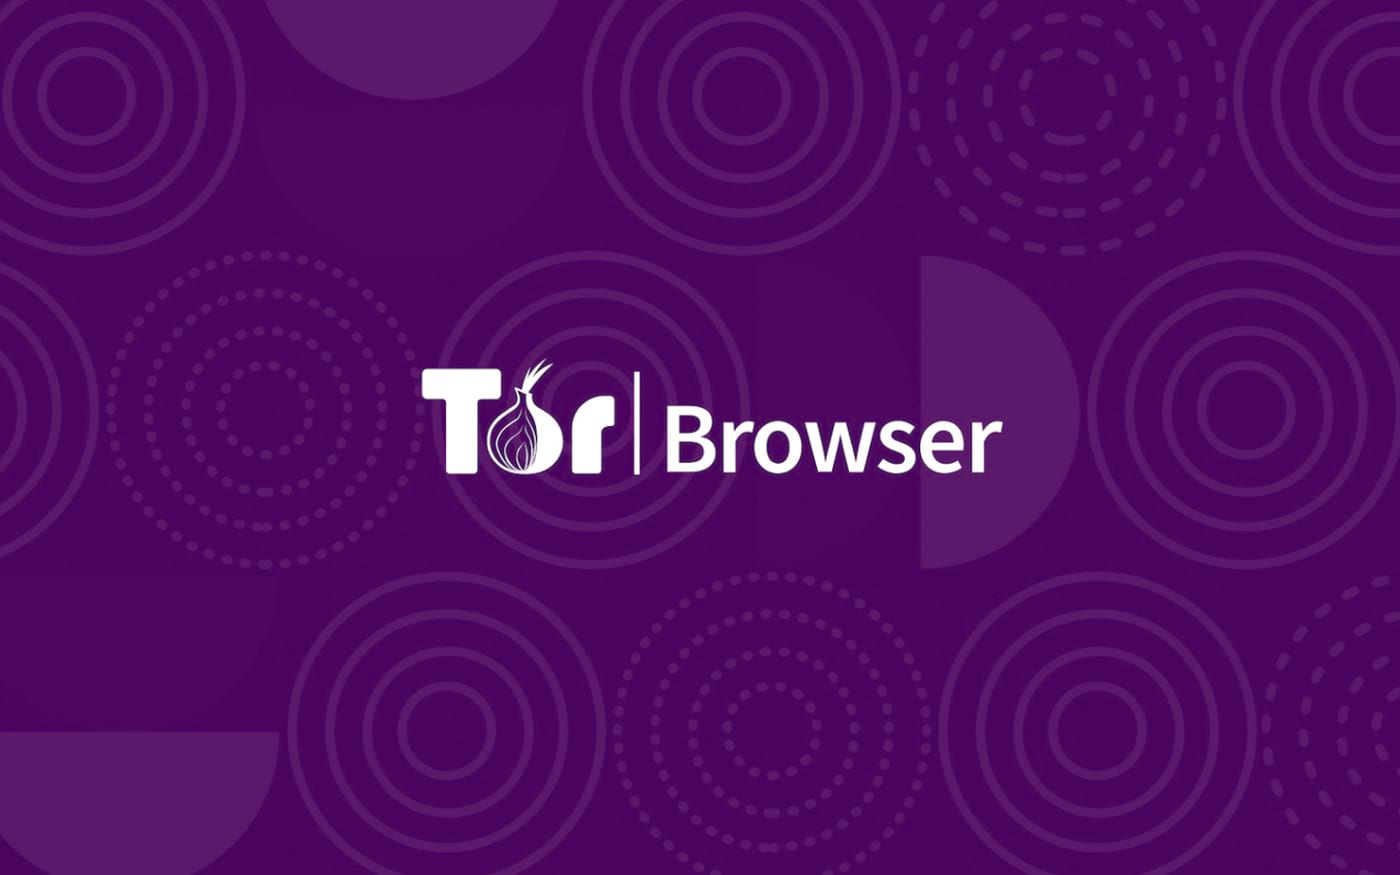 websites for tor browser hydra